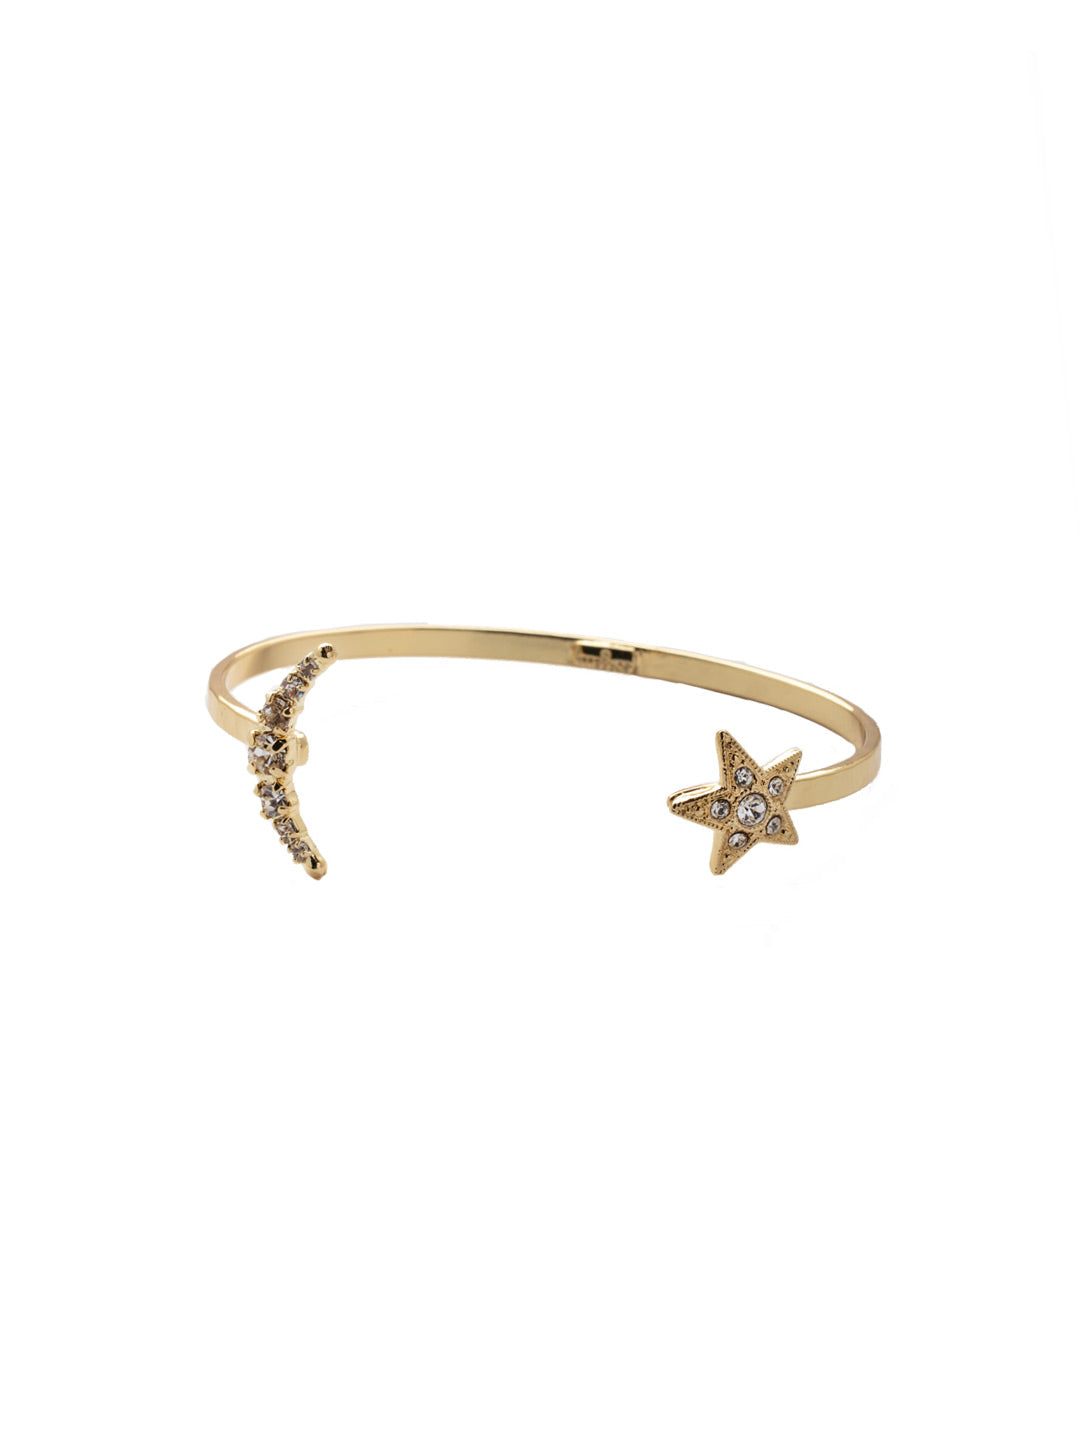 Product Image: Nebula Cuff Bracelet